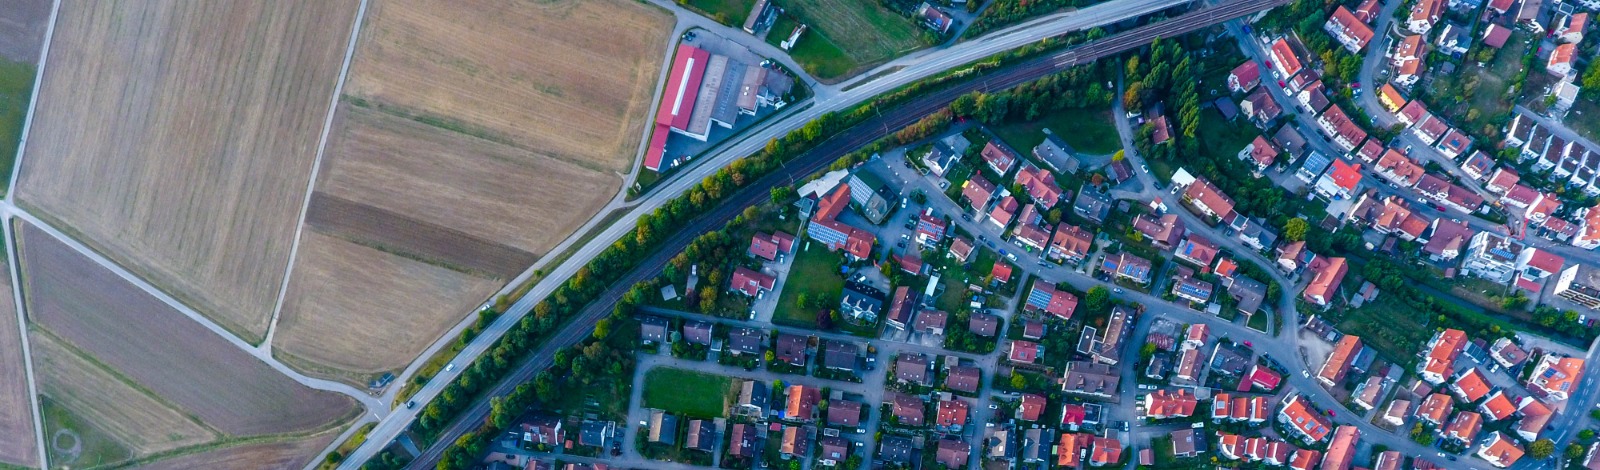 aerial view of farm adjacent to subdivision